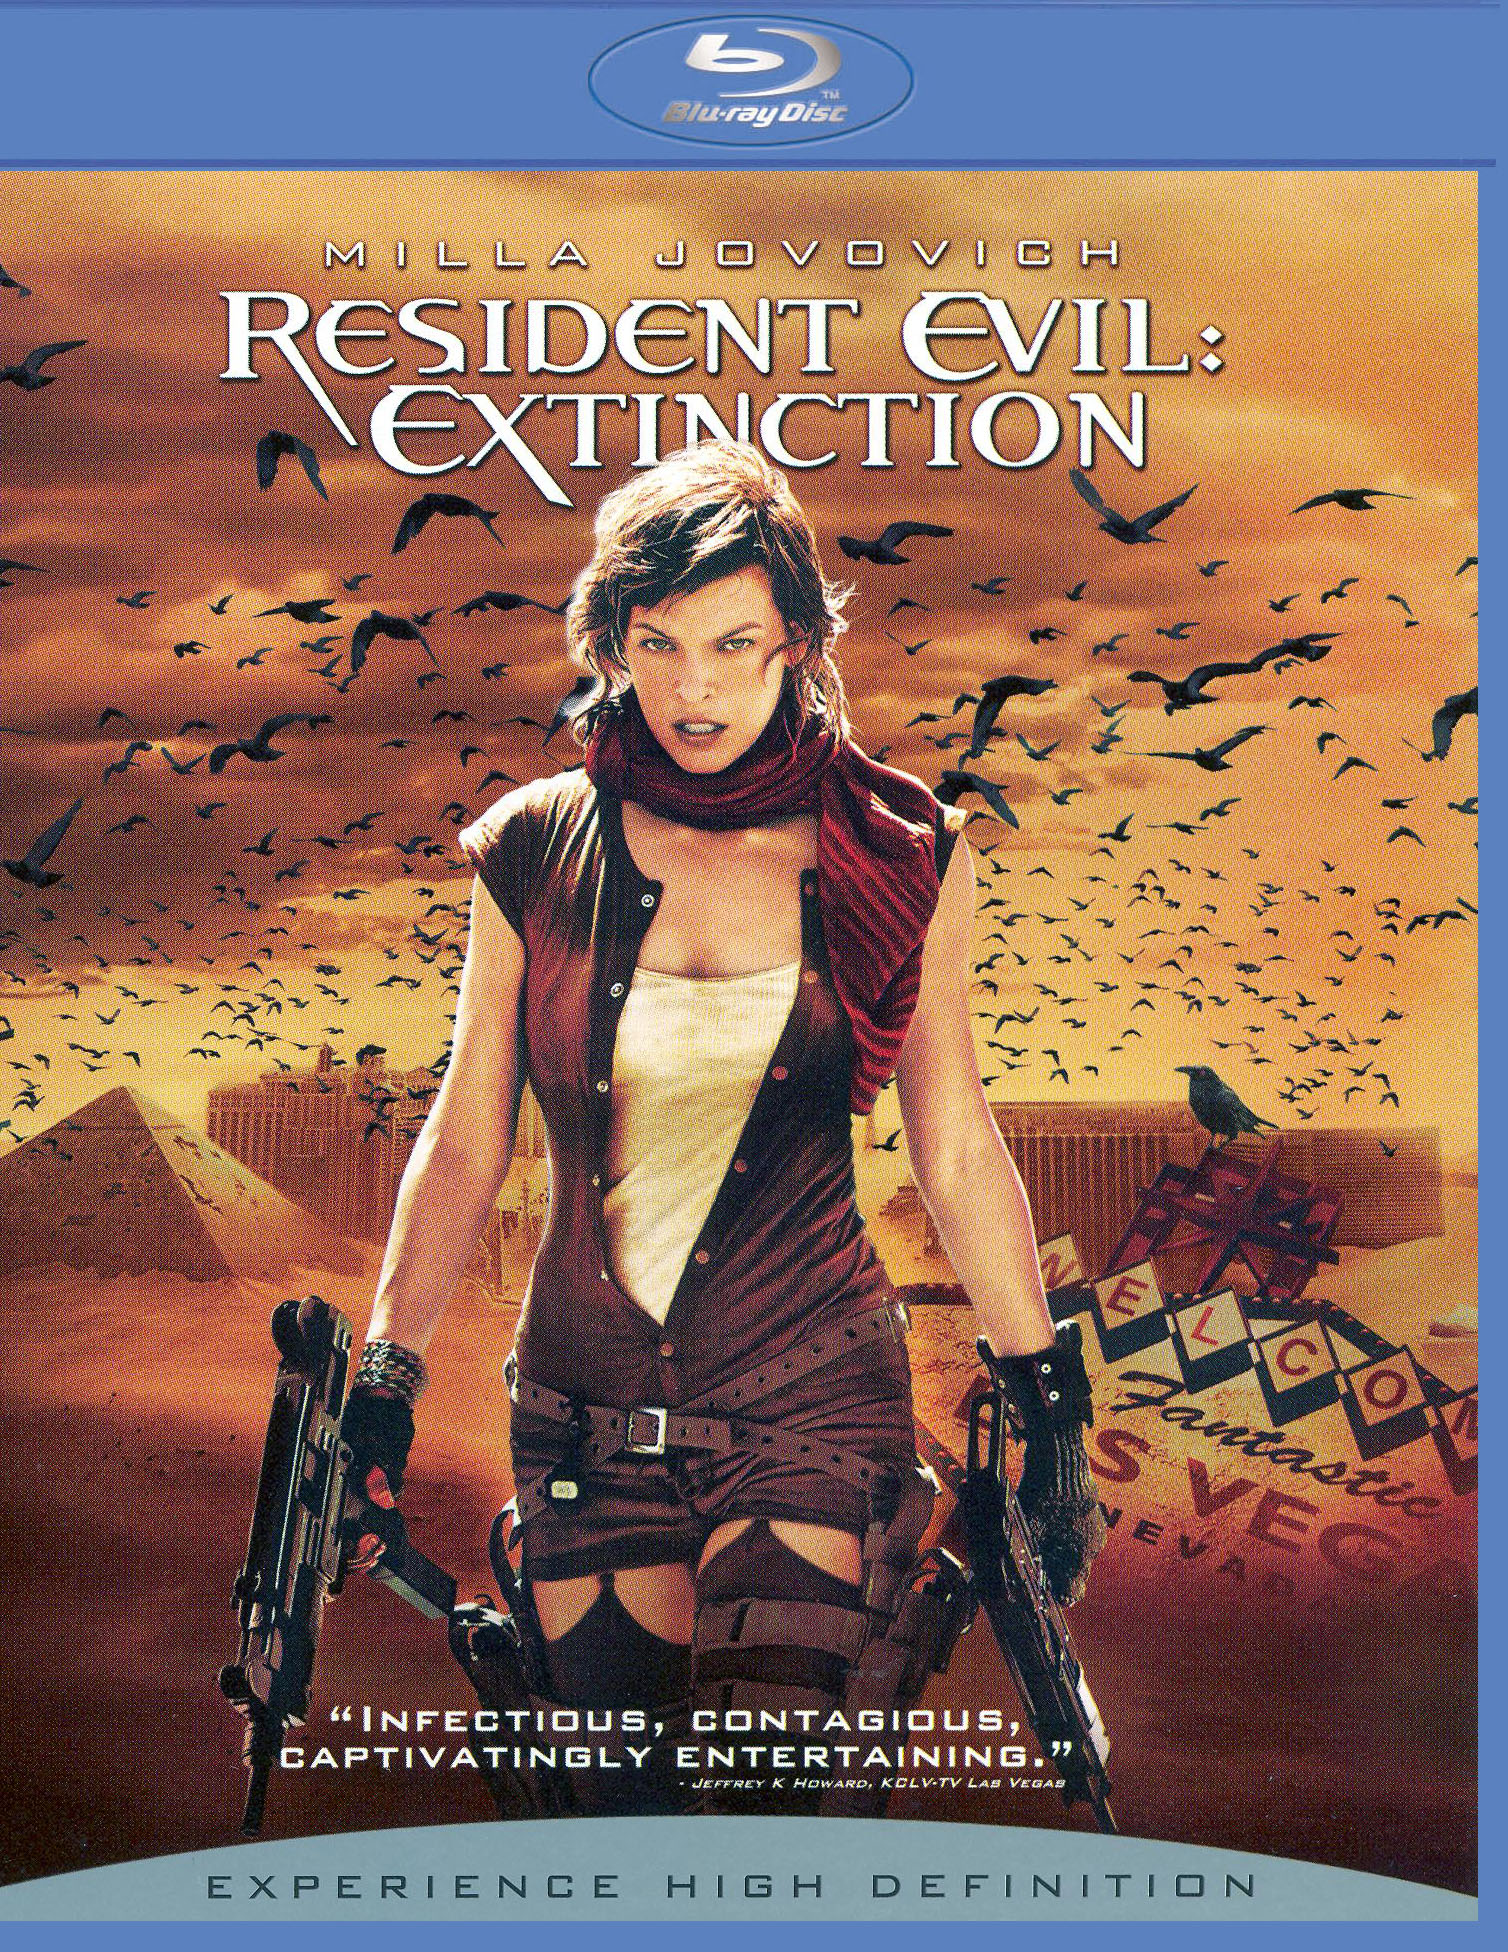 The Resident Evil Collection (Resident Evil / Resident Evil: Apocalypse /  Resident Evil: Extinction / Resident Evil: Afterlife / Resident Evil